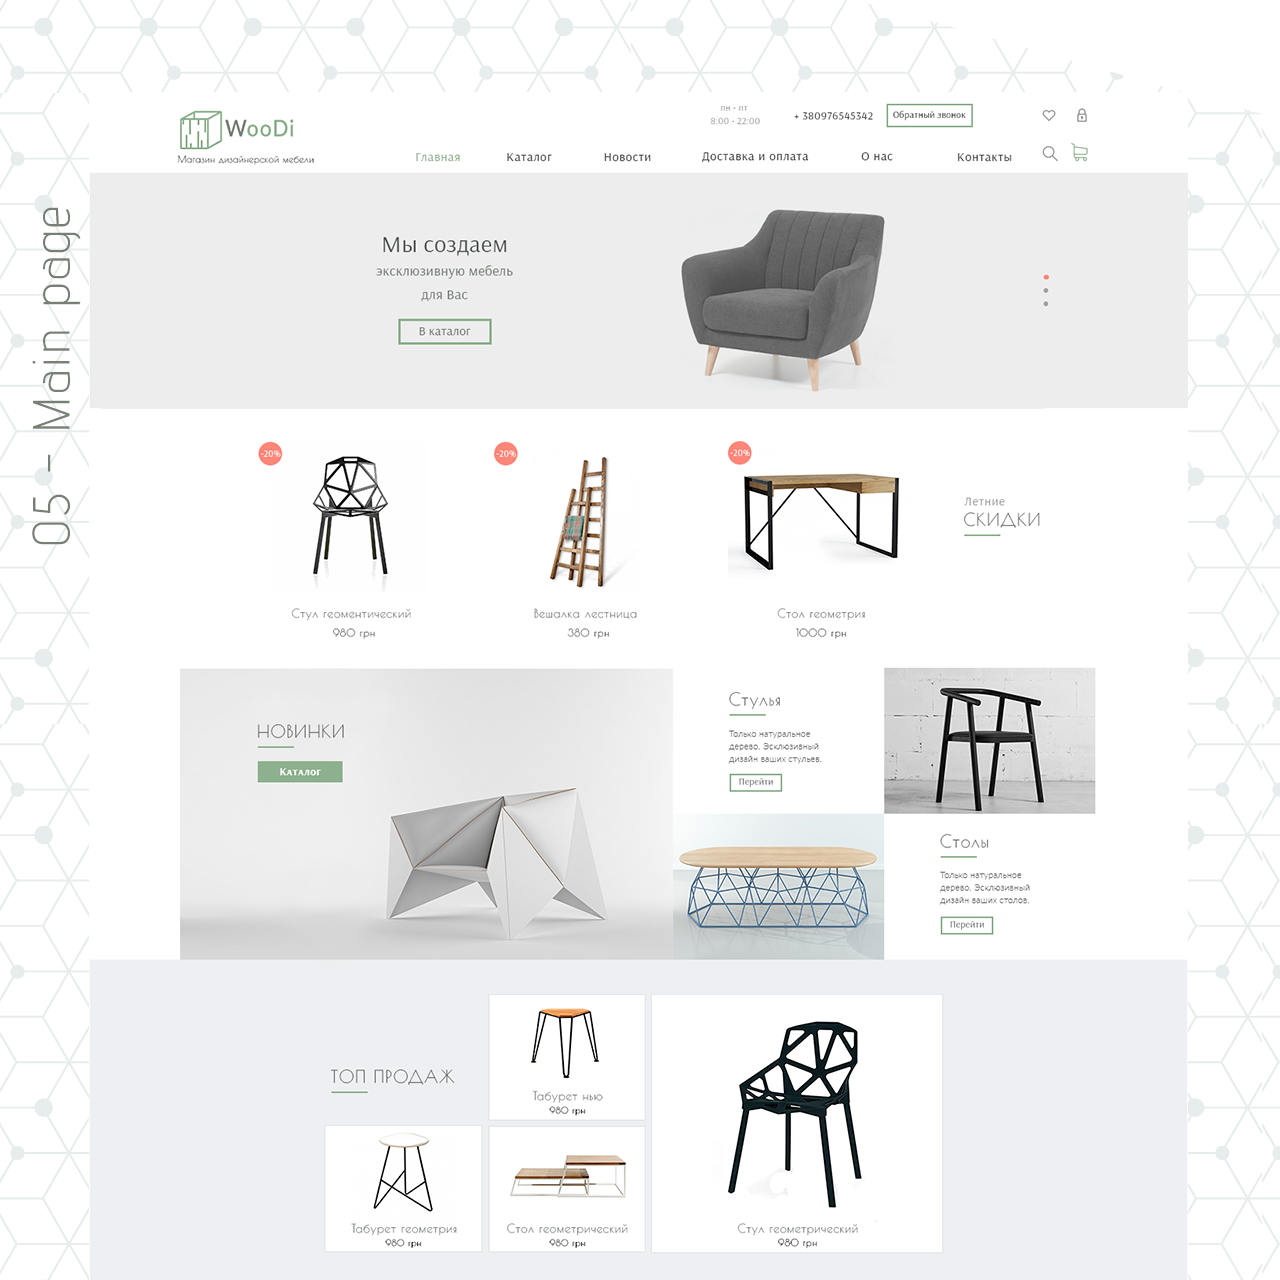 UX/UI design and branding for online furniture store “Woodi”